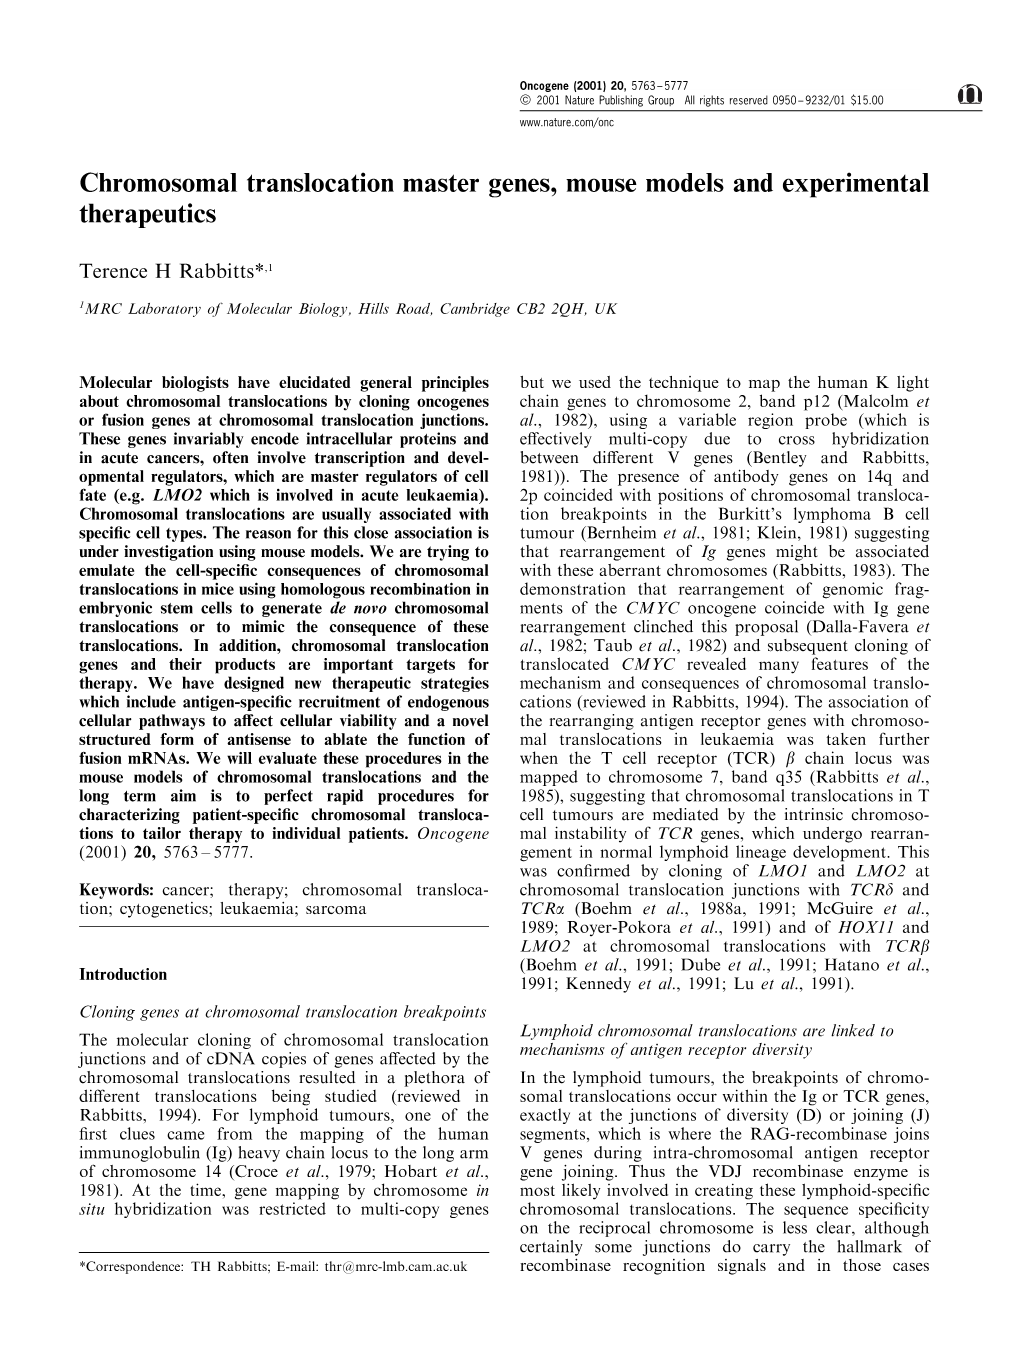 Chromosomal Translocation Master Genes, Mouse Models and Experimental Therapeutics